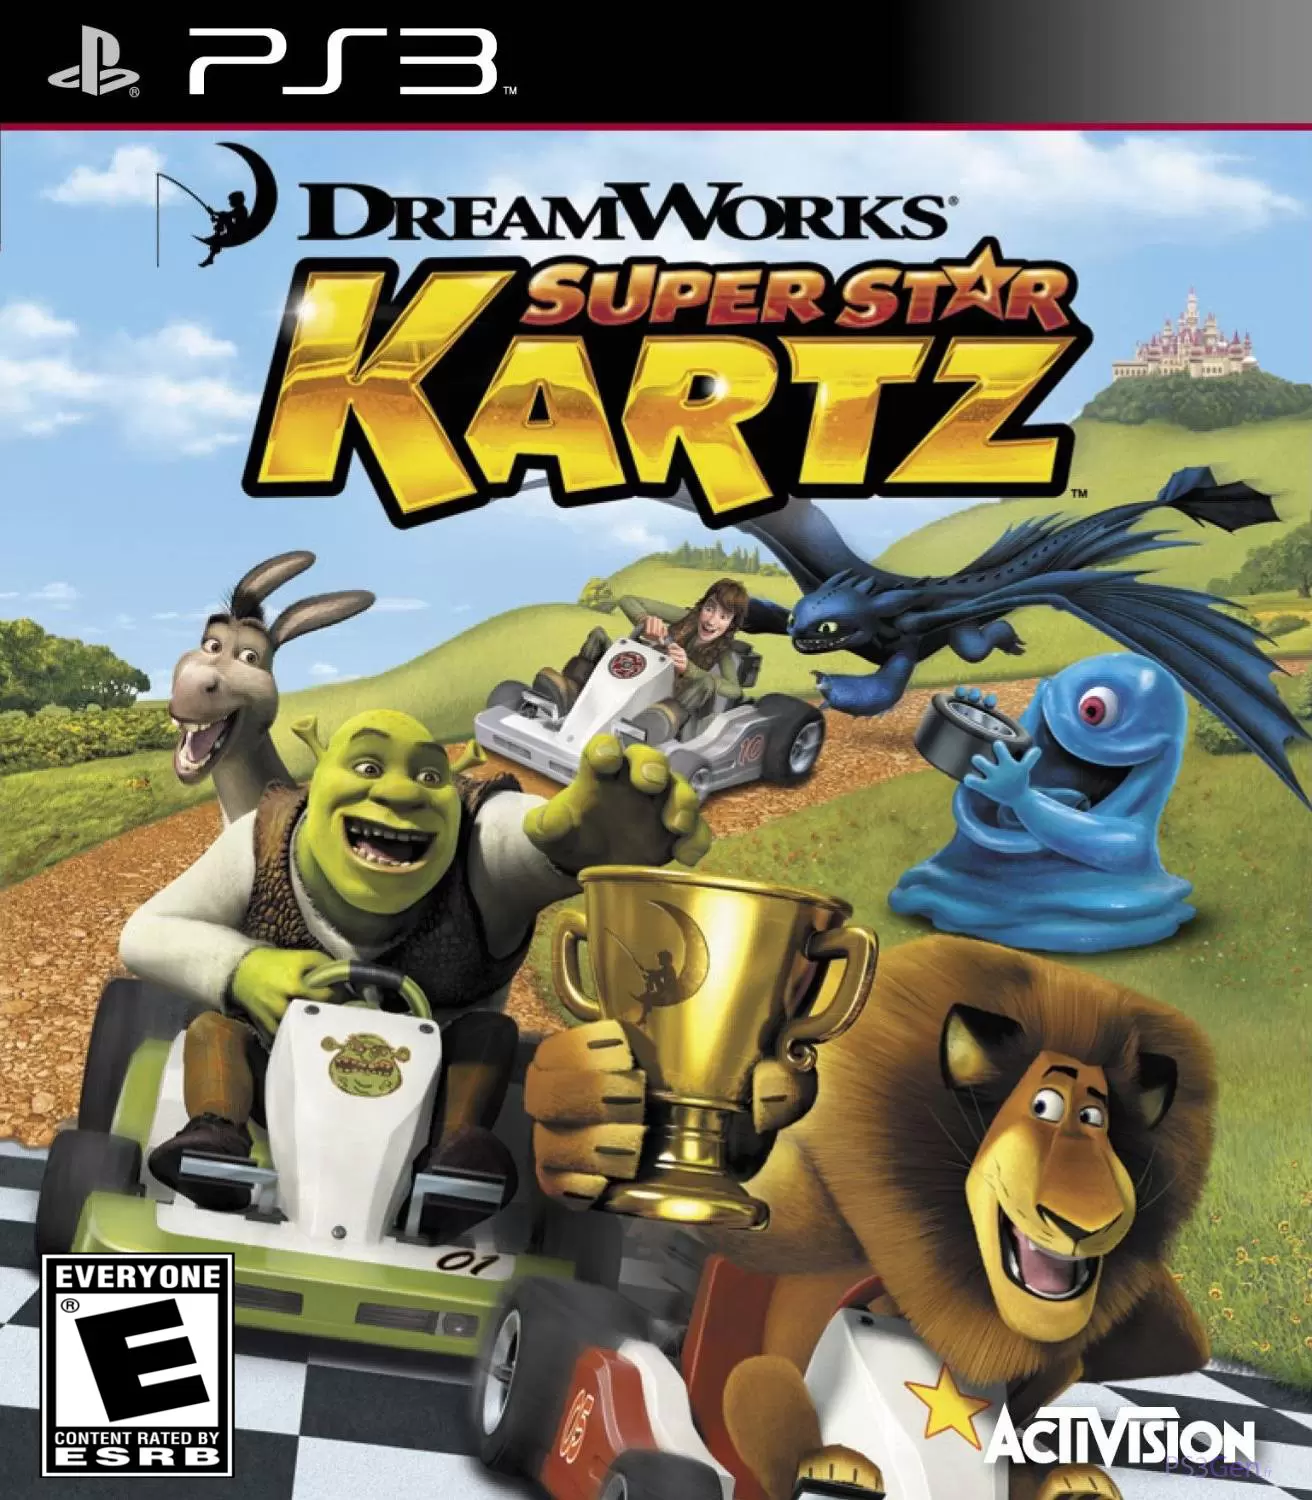 PS3 Games - DreamWorks Super Star Kartz